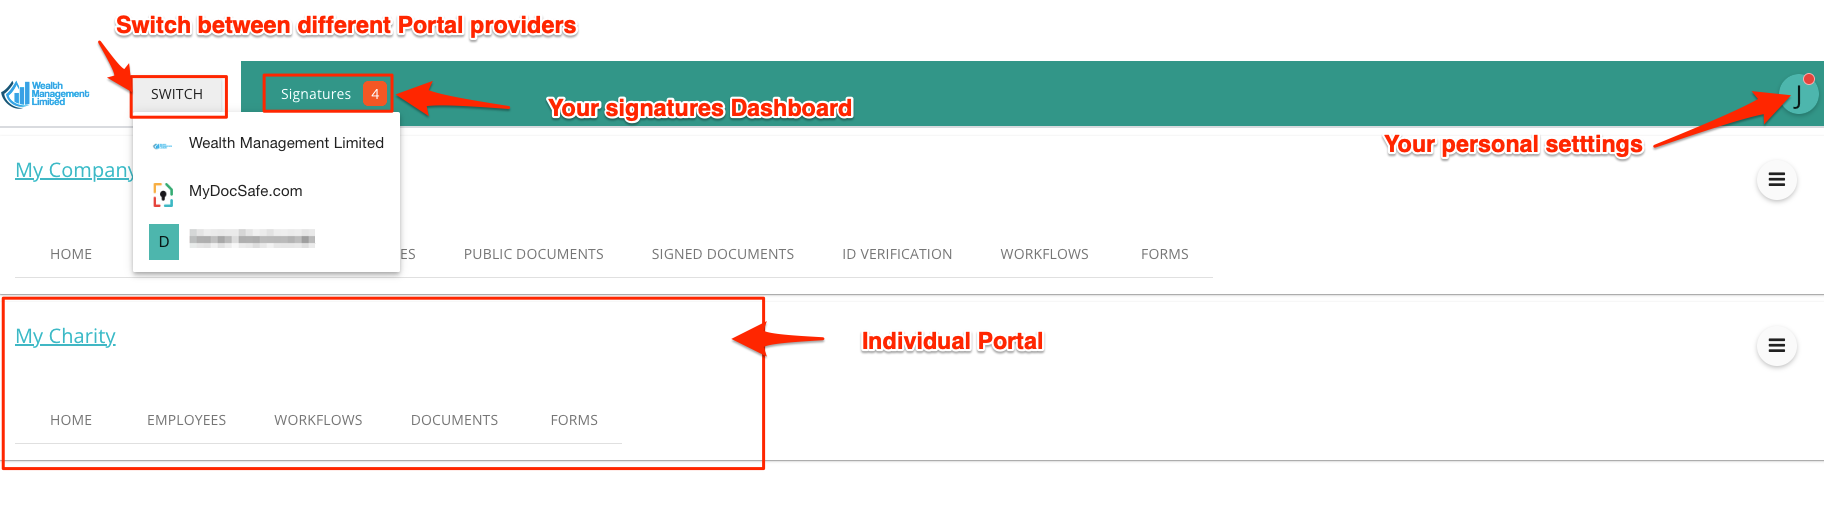 mydocsafe client portal dashboard 2